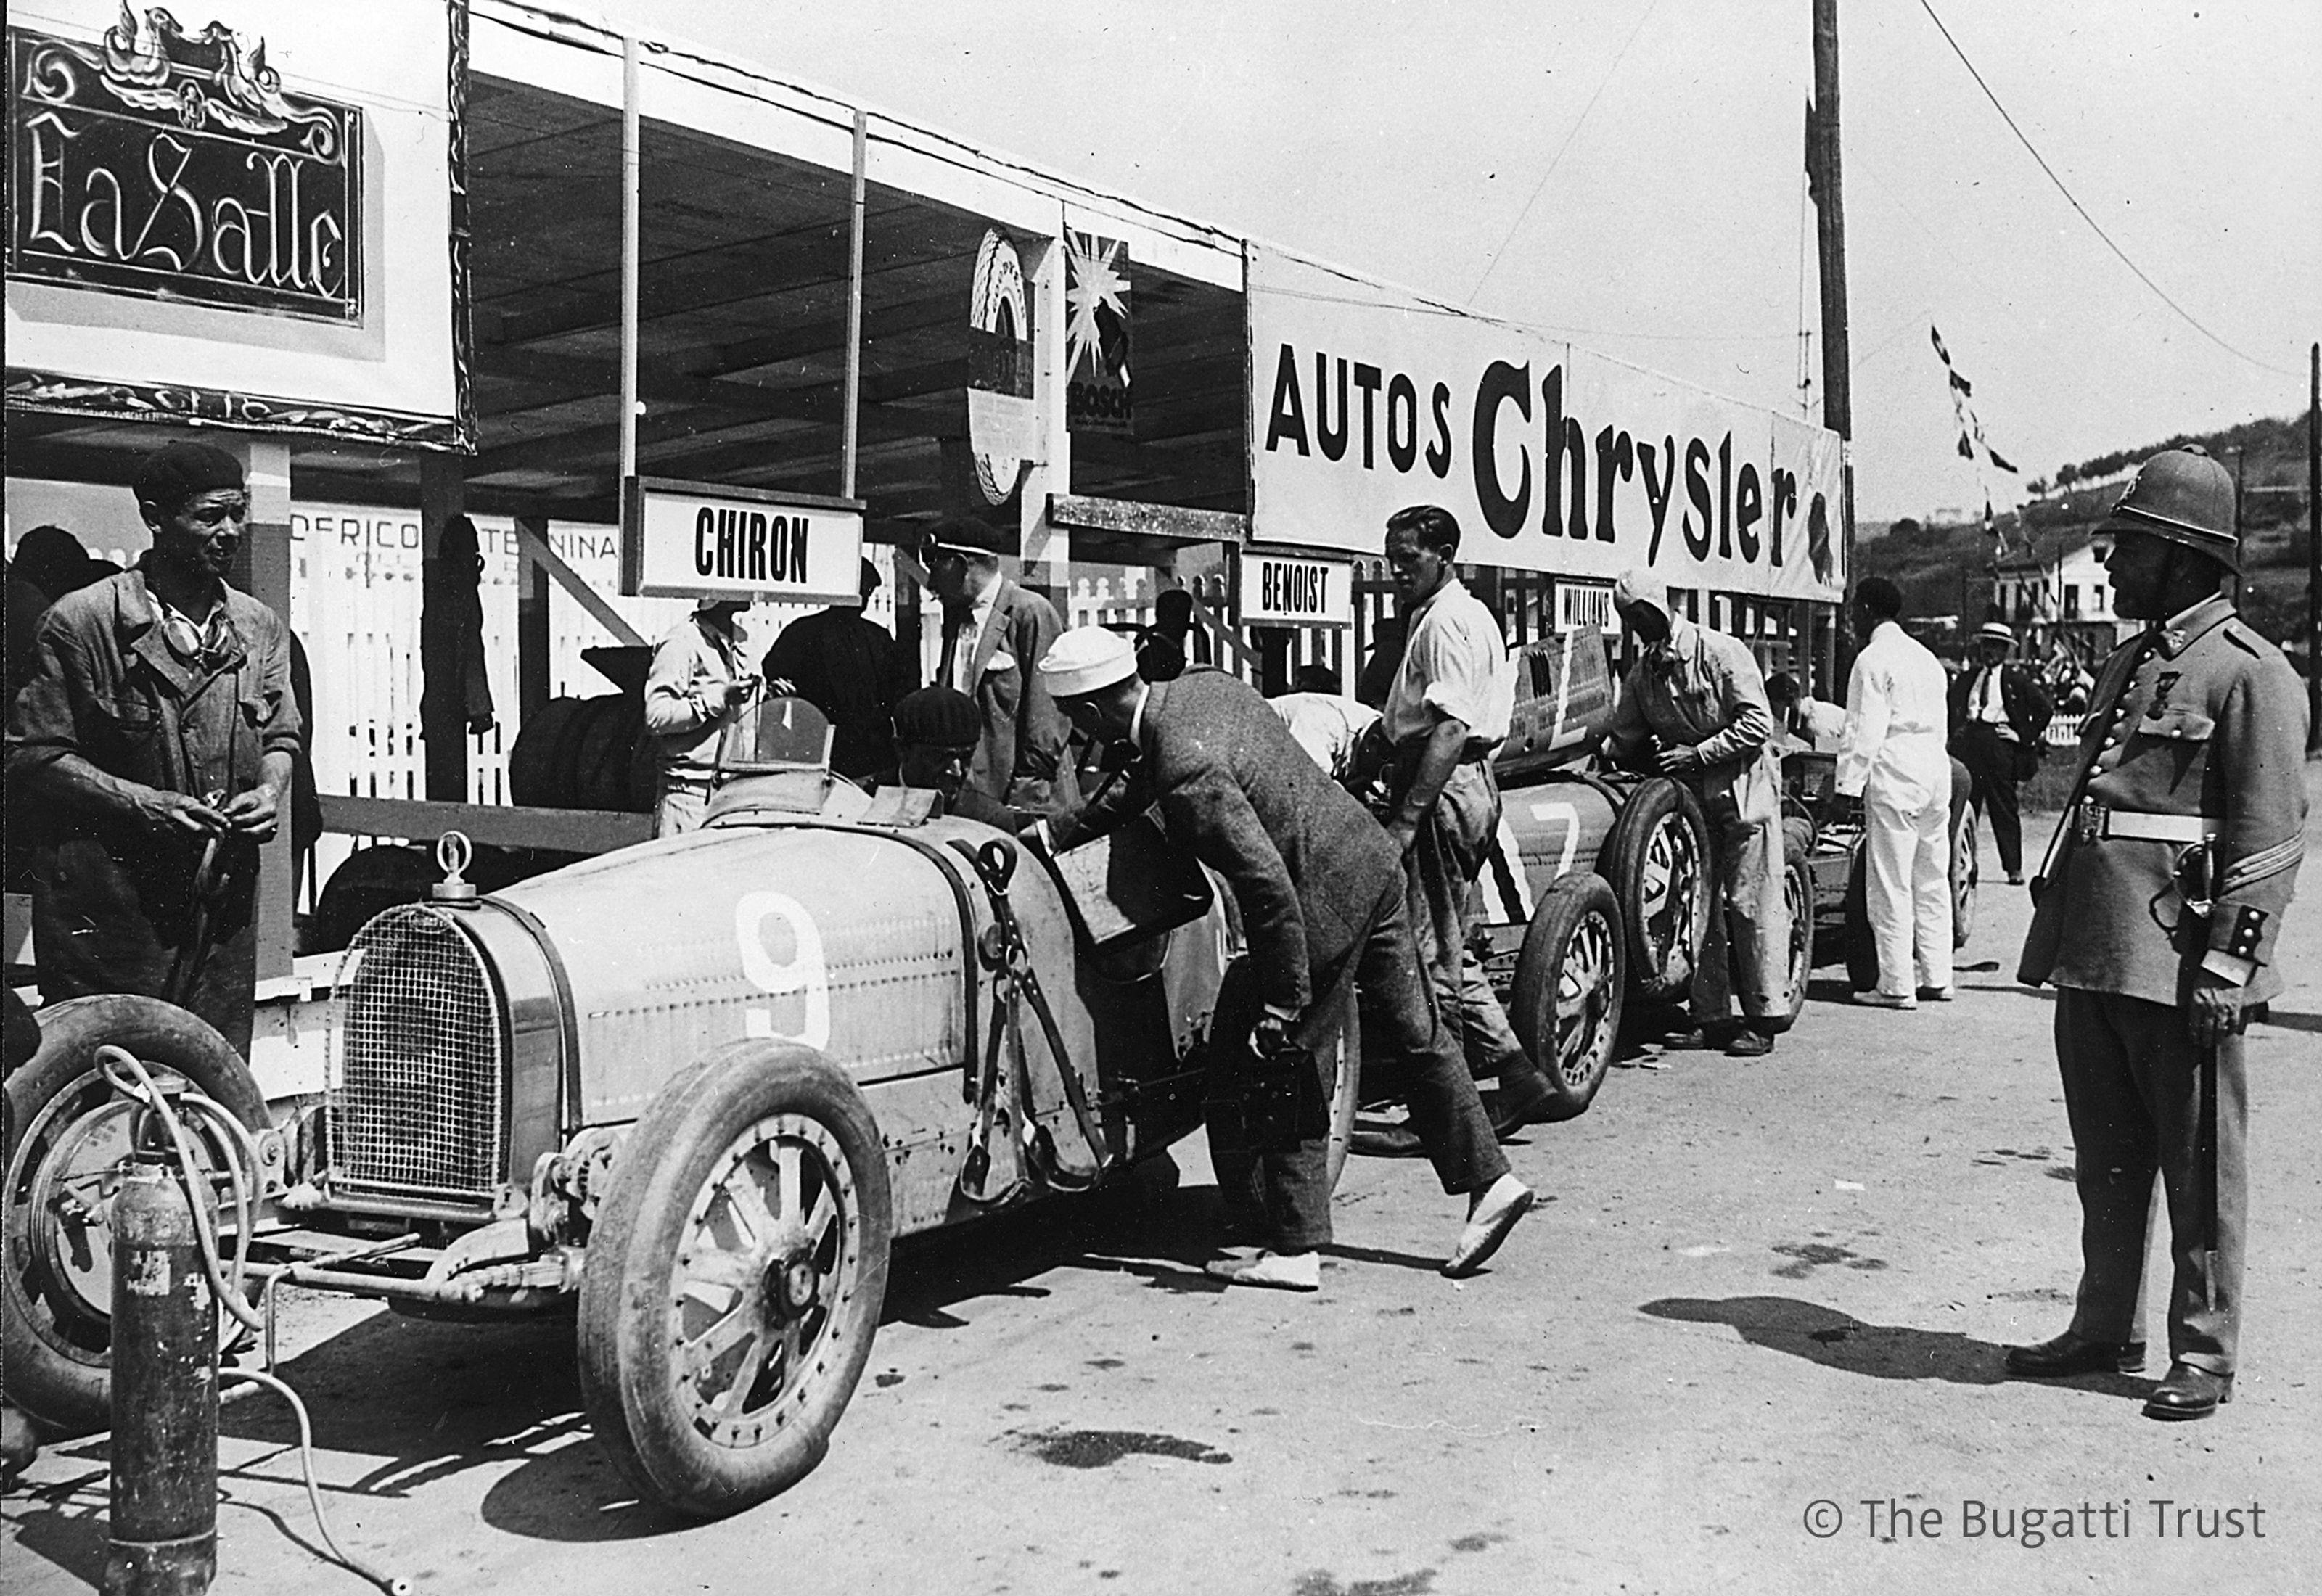 Bugatti’s dominance in 1928